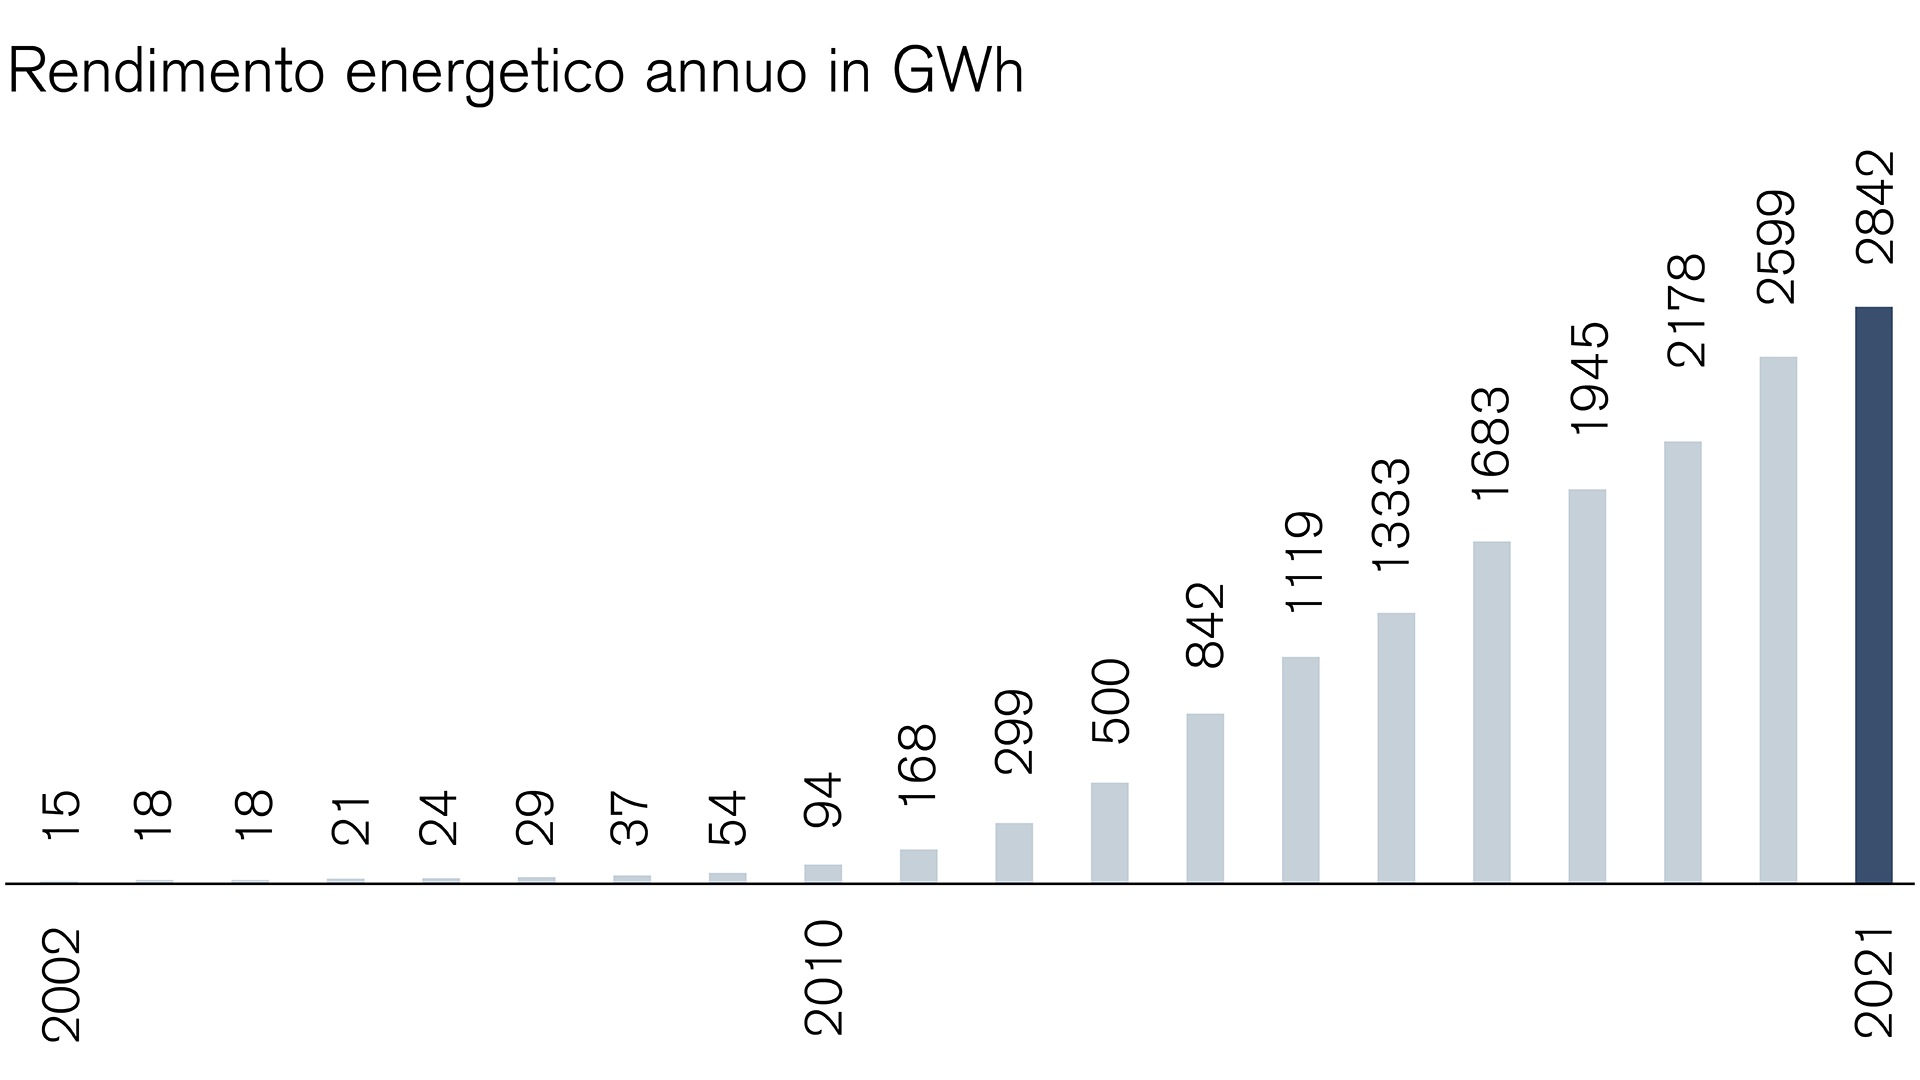 Solar power: Annual energy yield in GWh is increasing